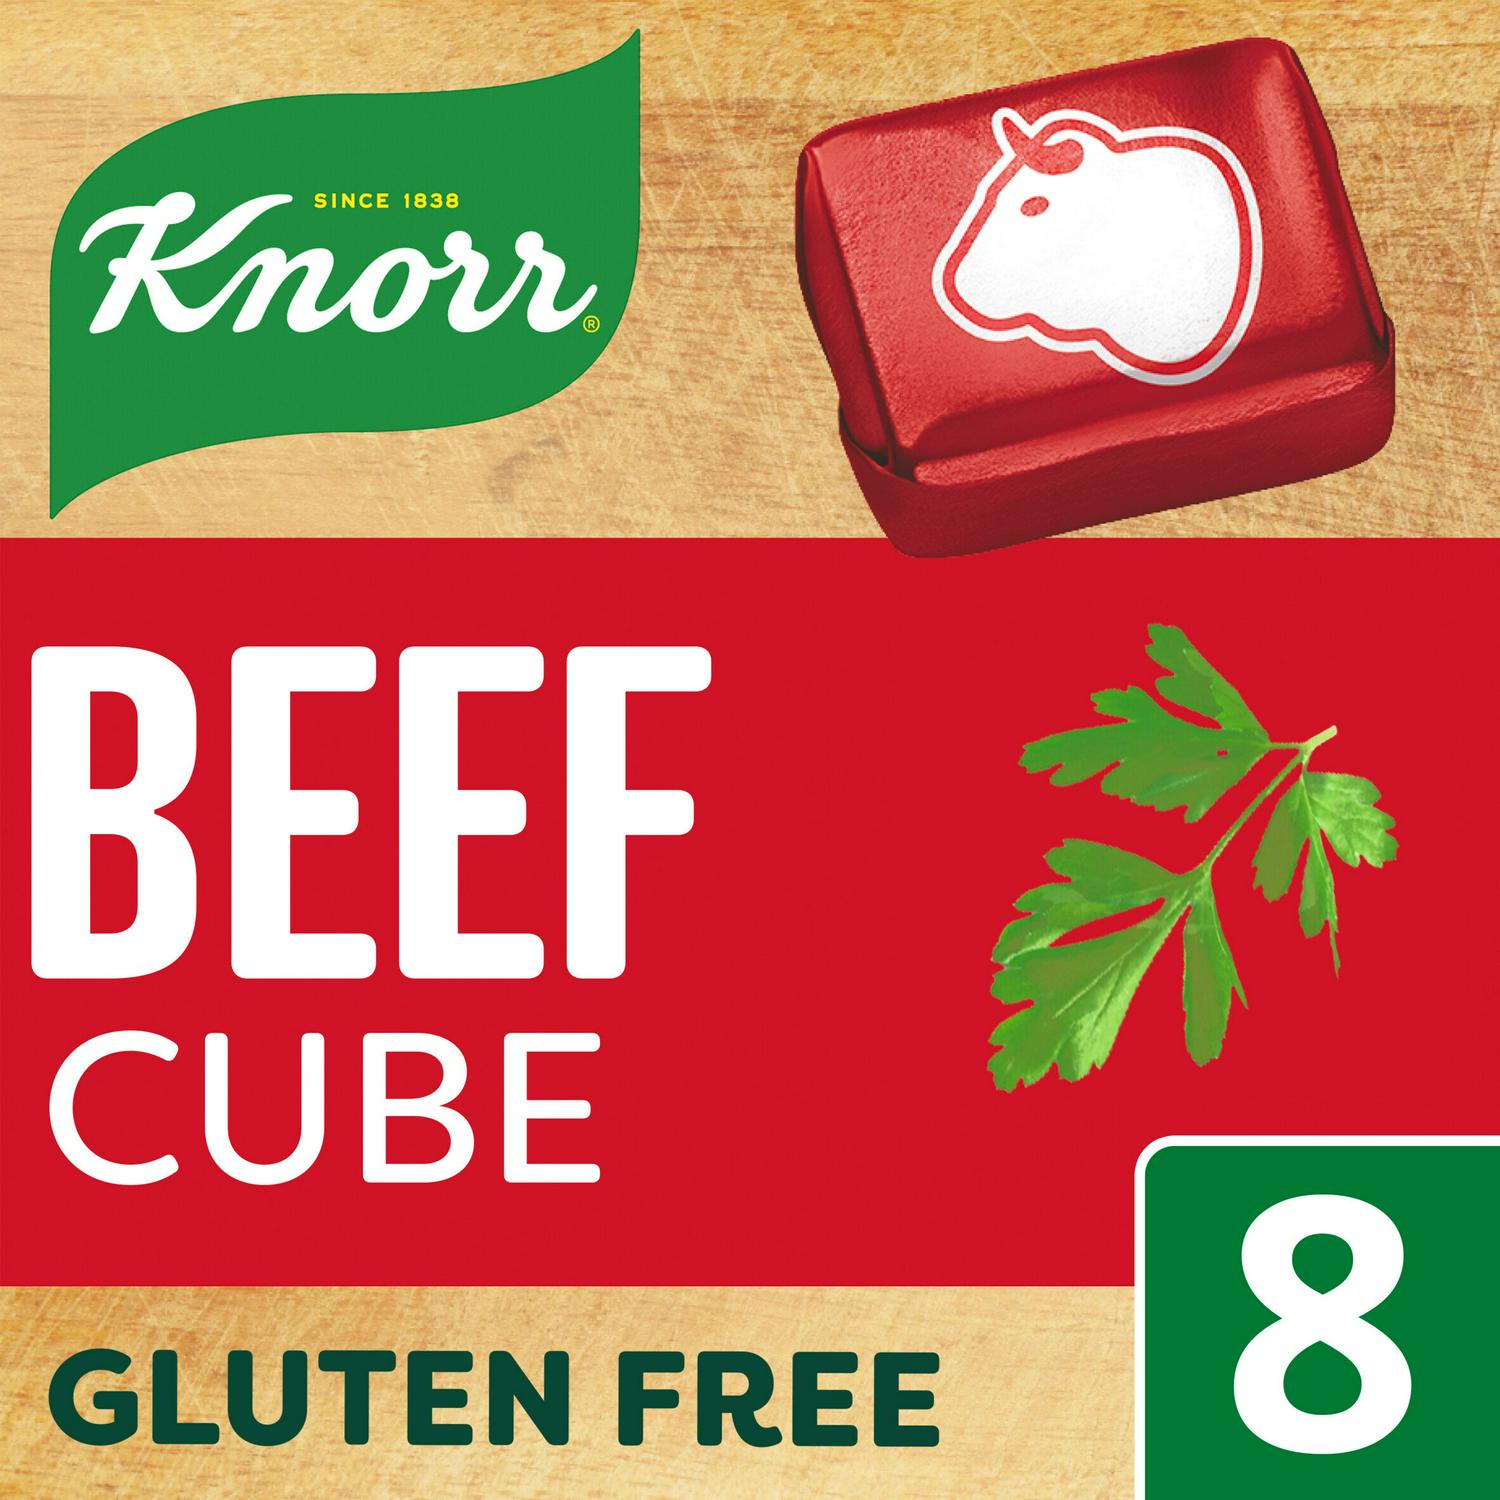 KNORR BEEF CUBE 8